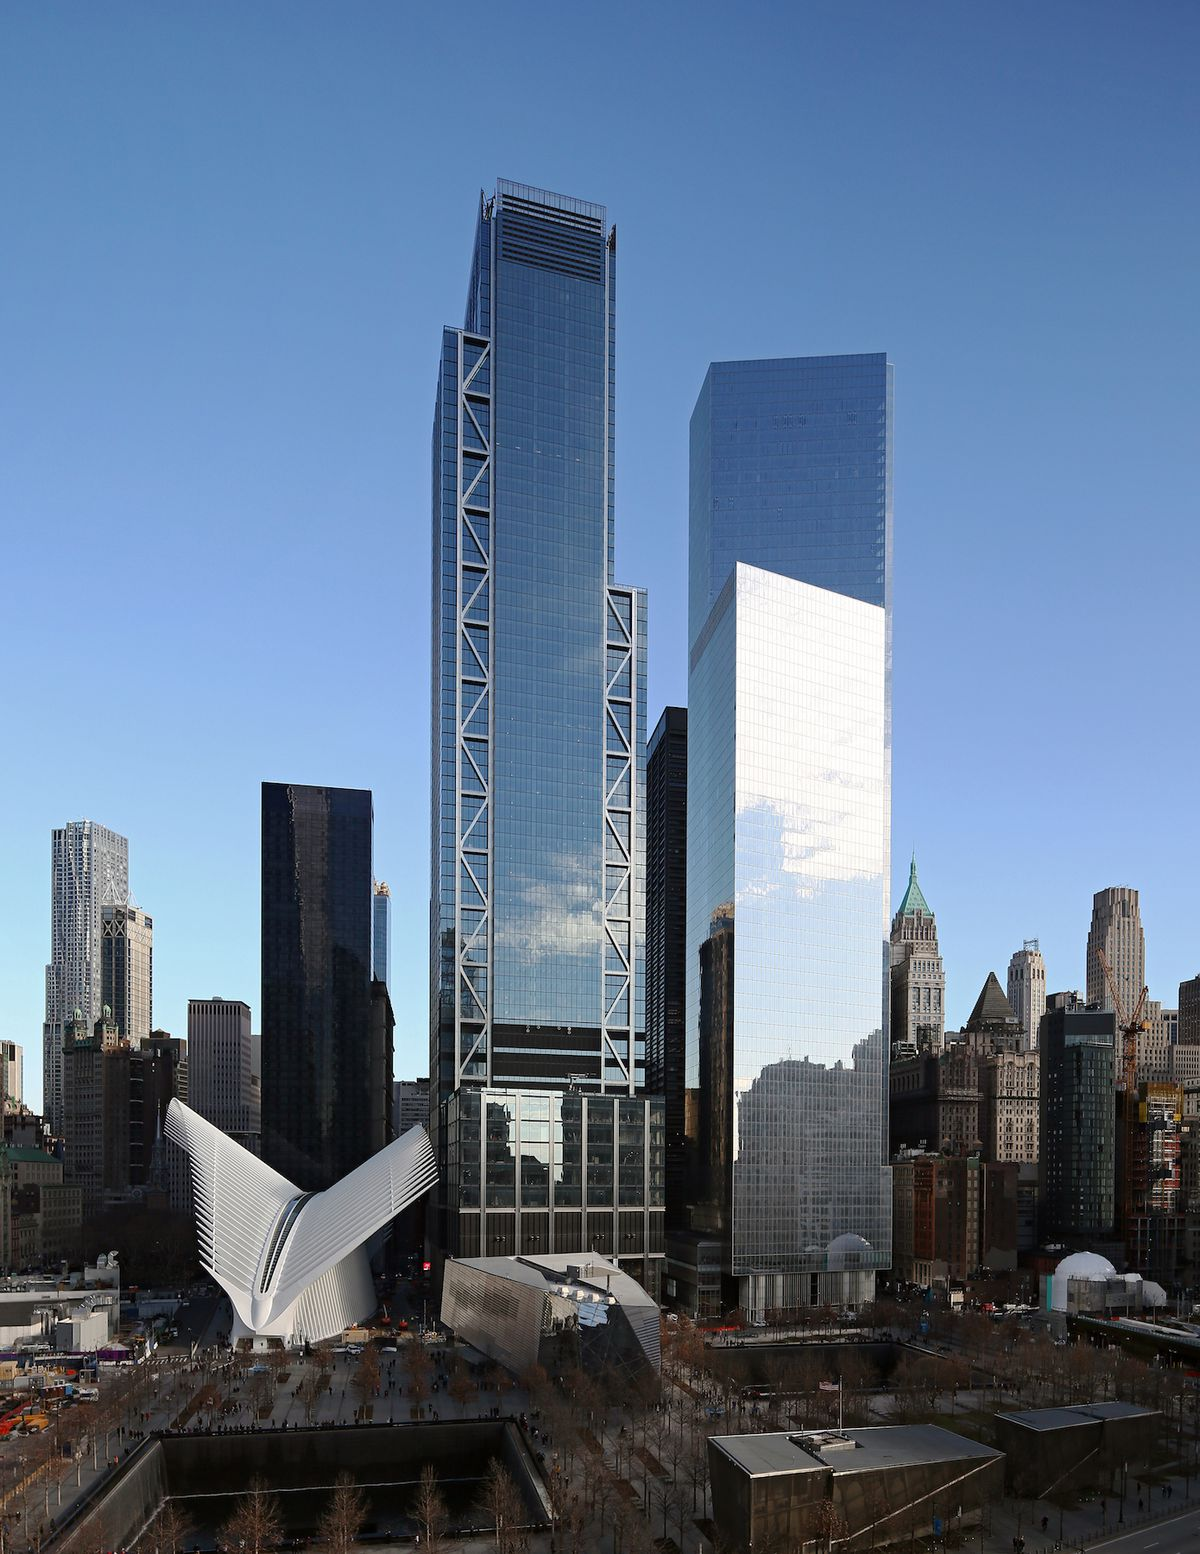 The New York Trade Center